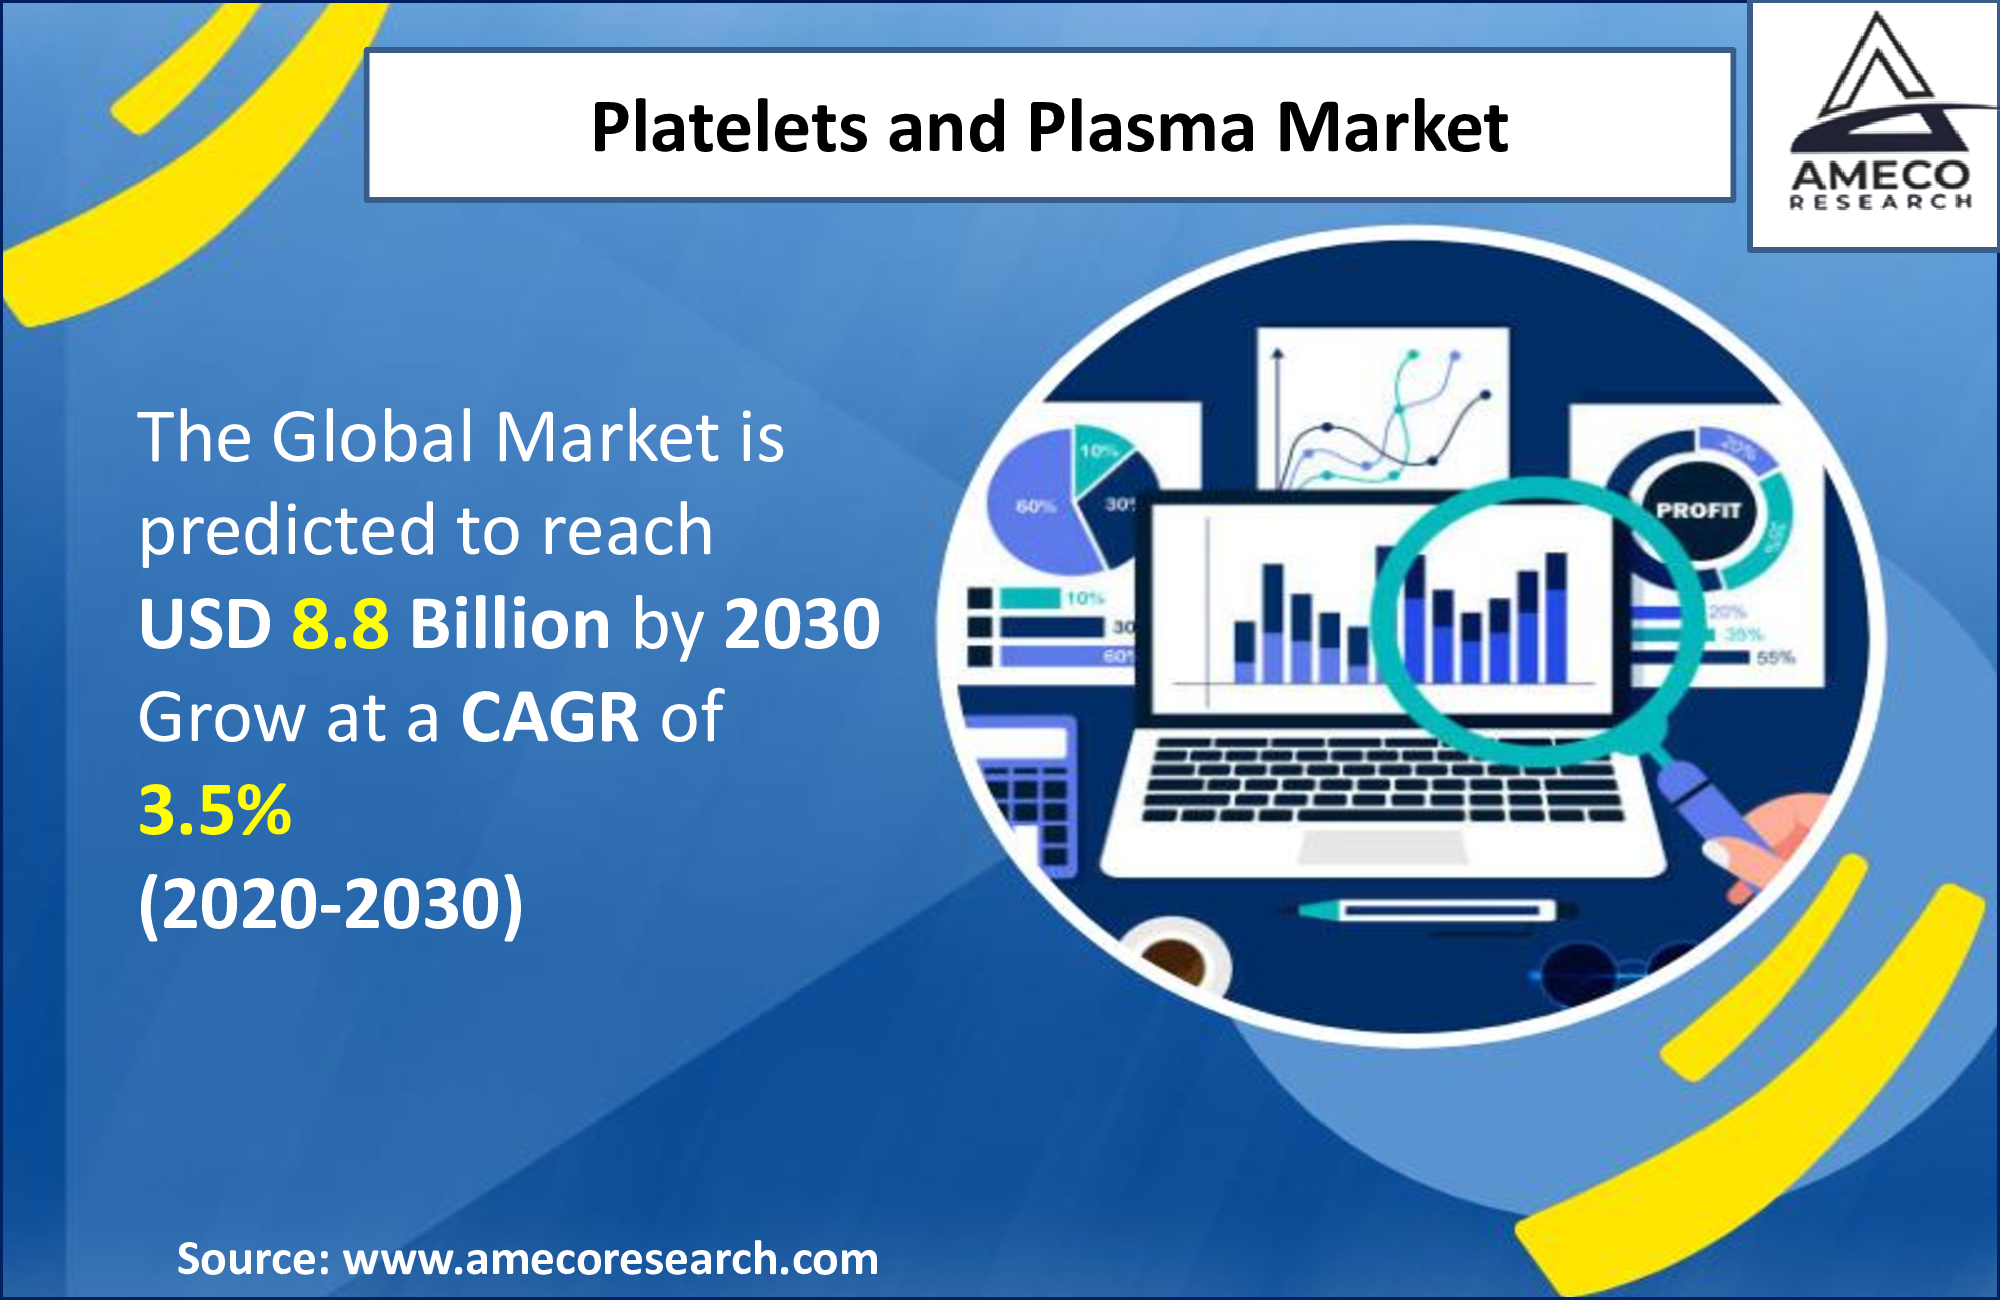 Platelets and Plasma Market